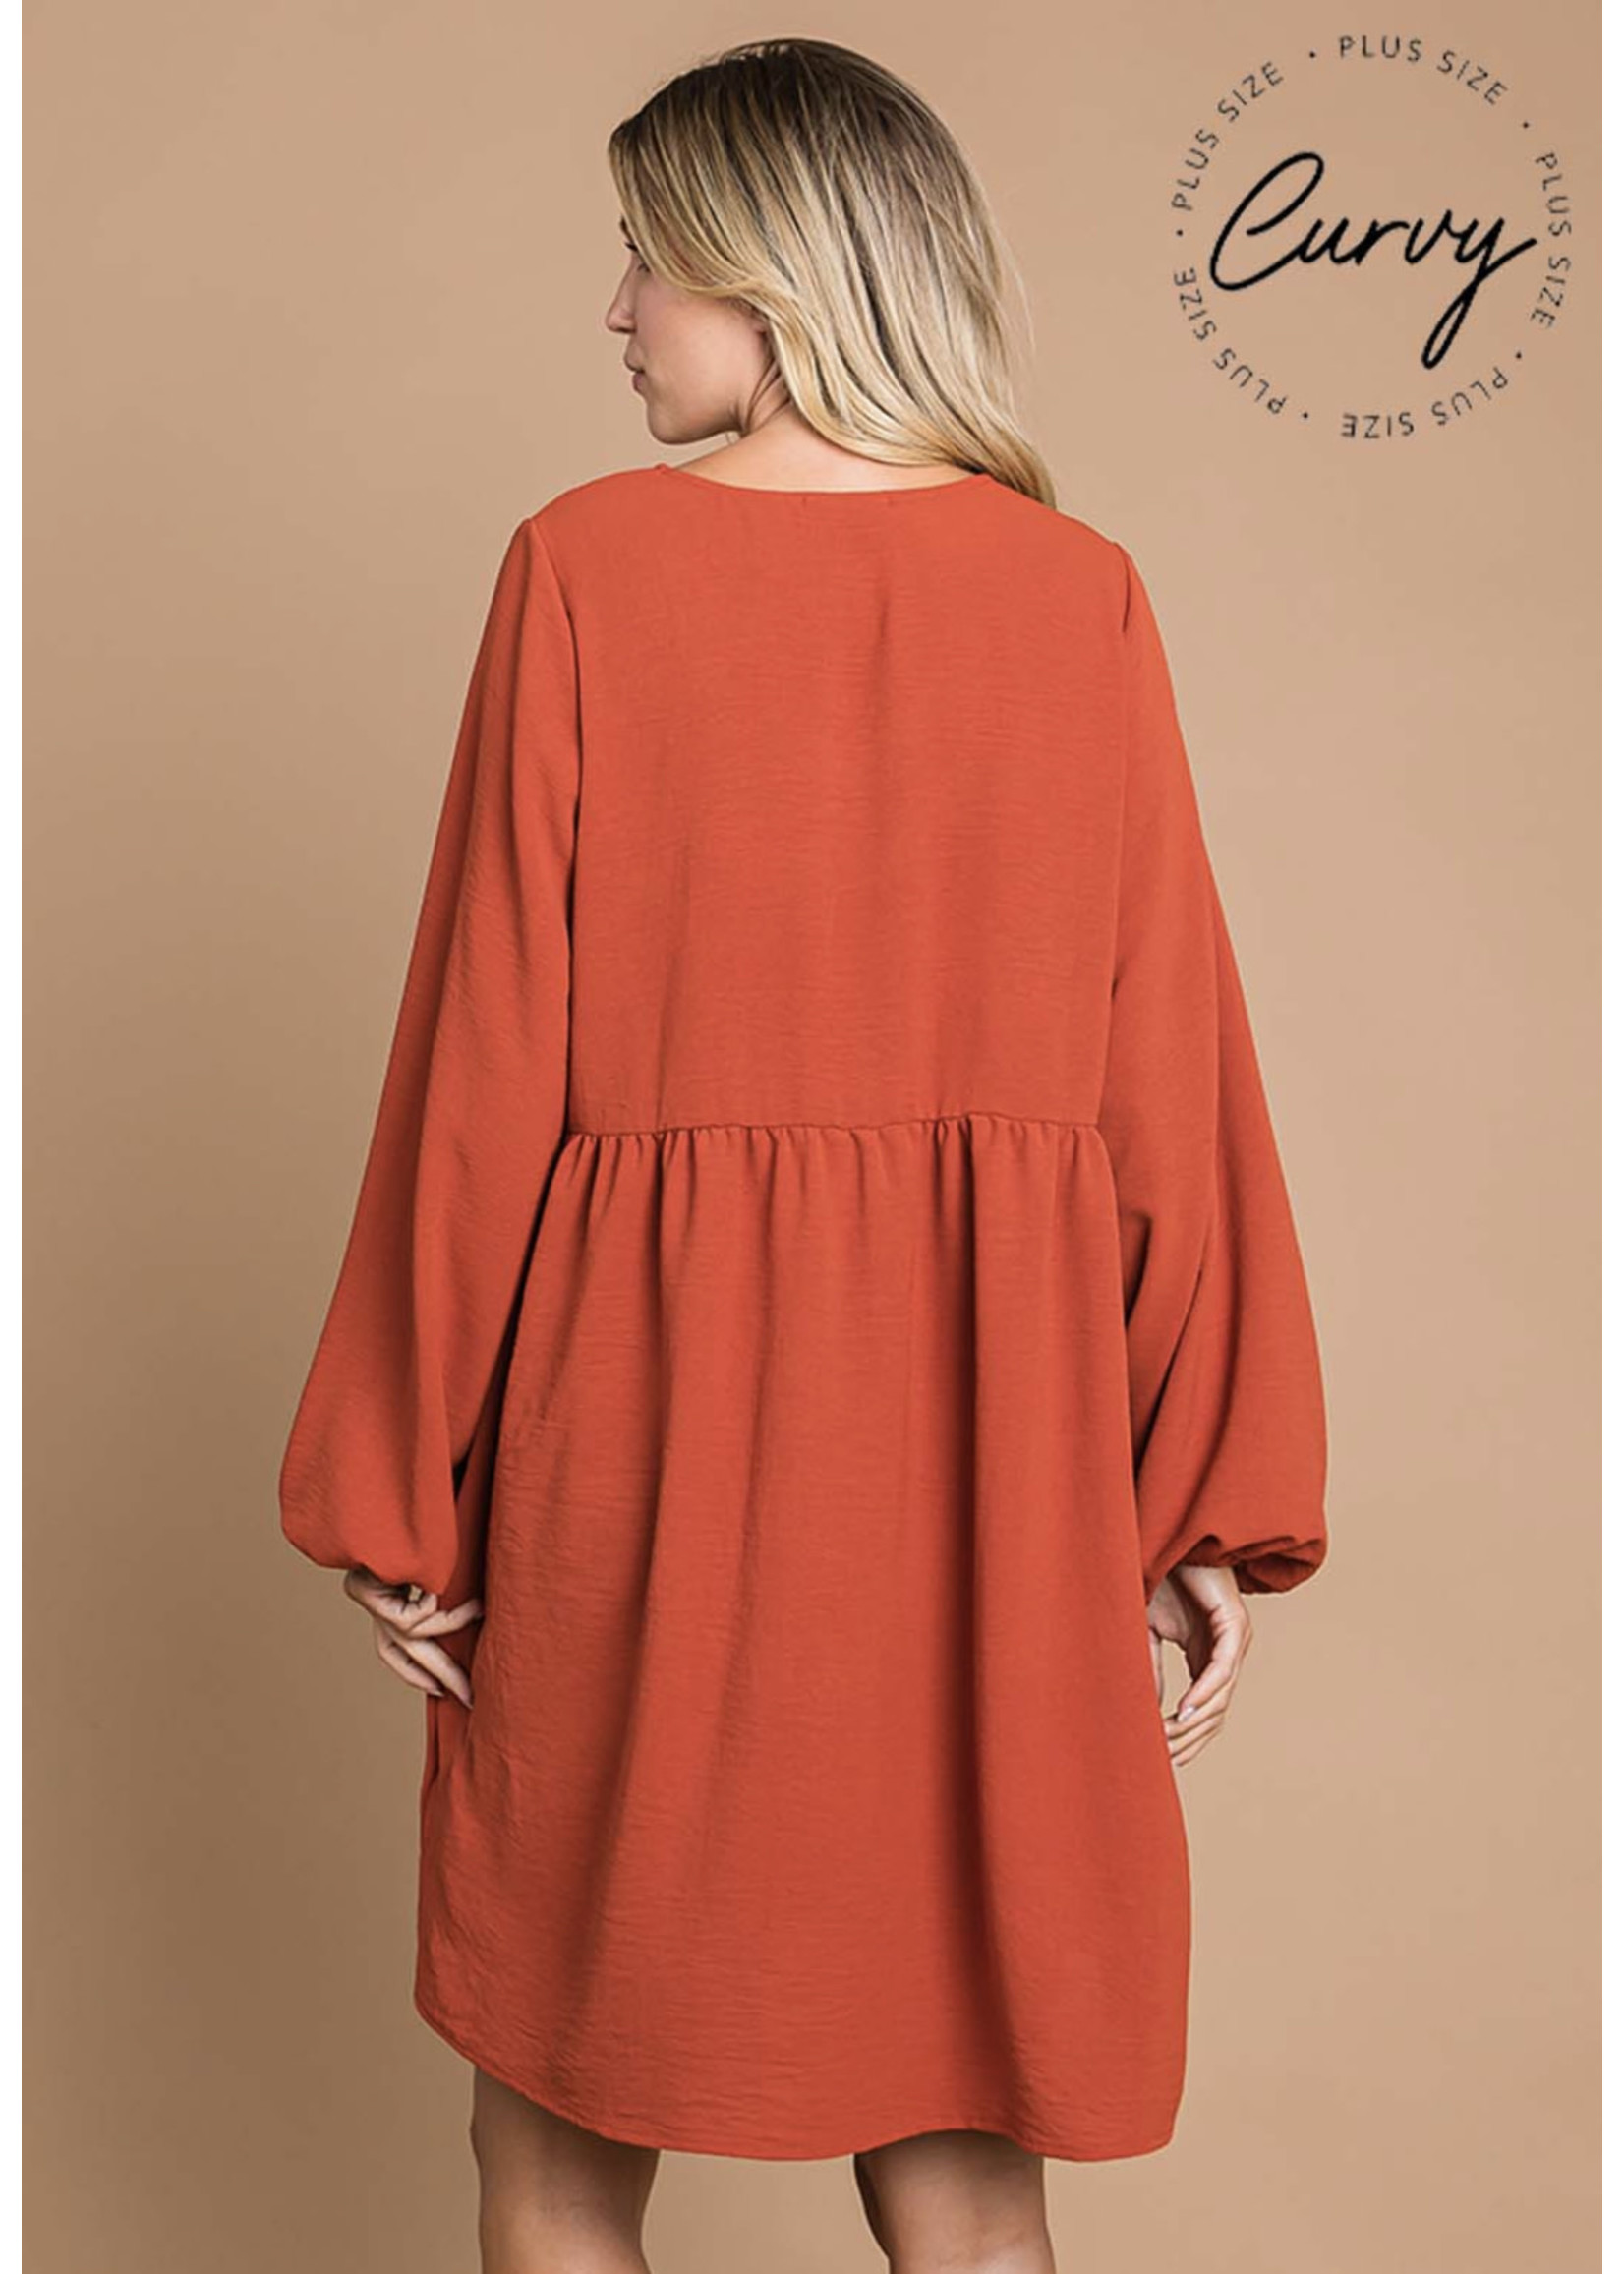 Pumpkin Spice Curvy Long Sleeve Rust Pocket Dress